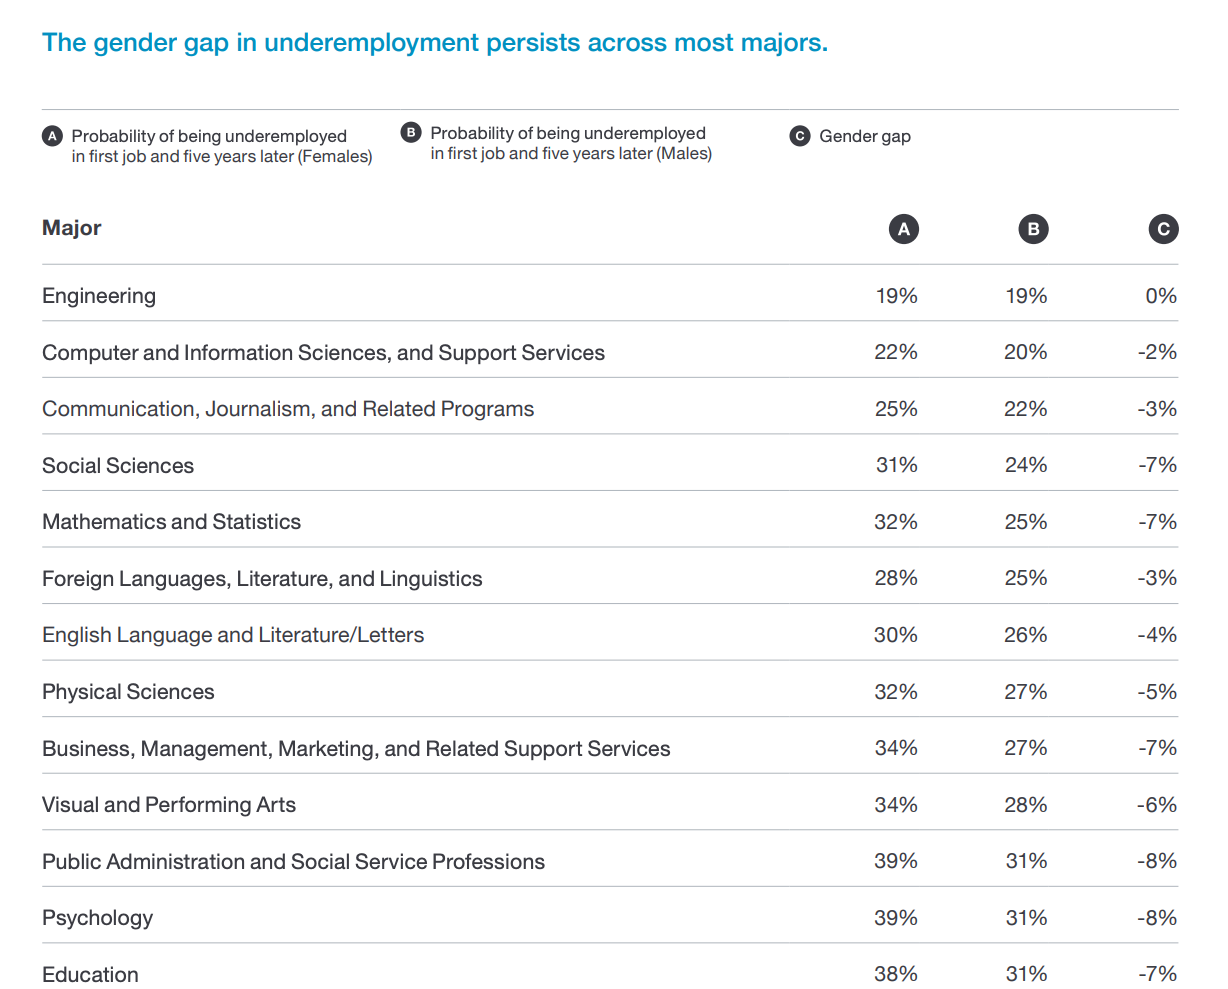 Gender gap in undermployment comparing majors